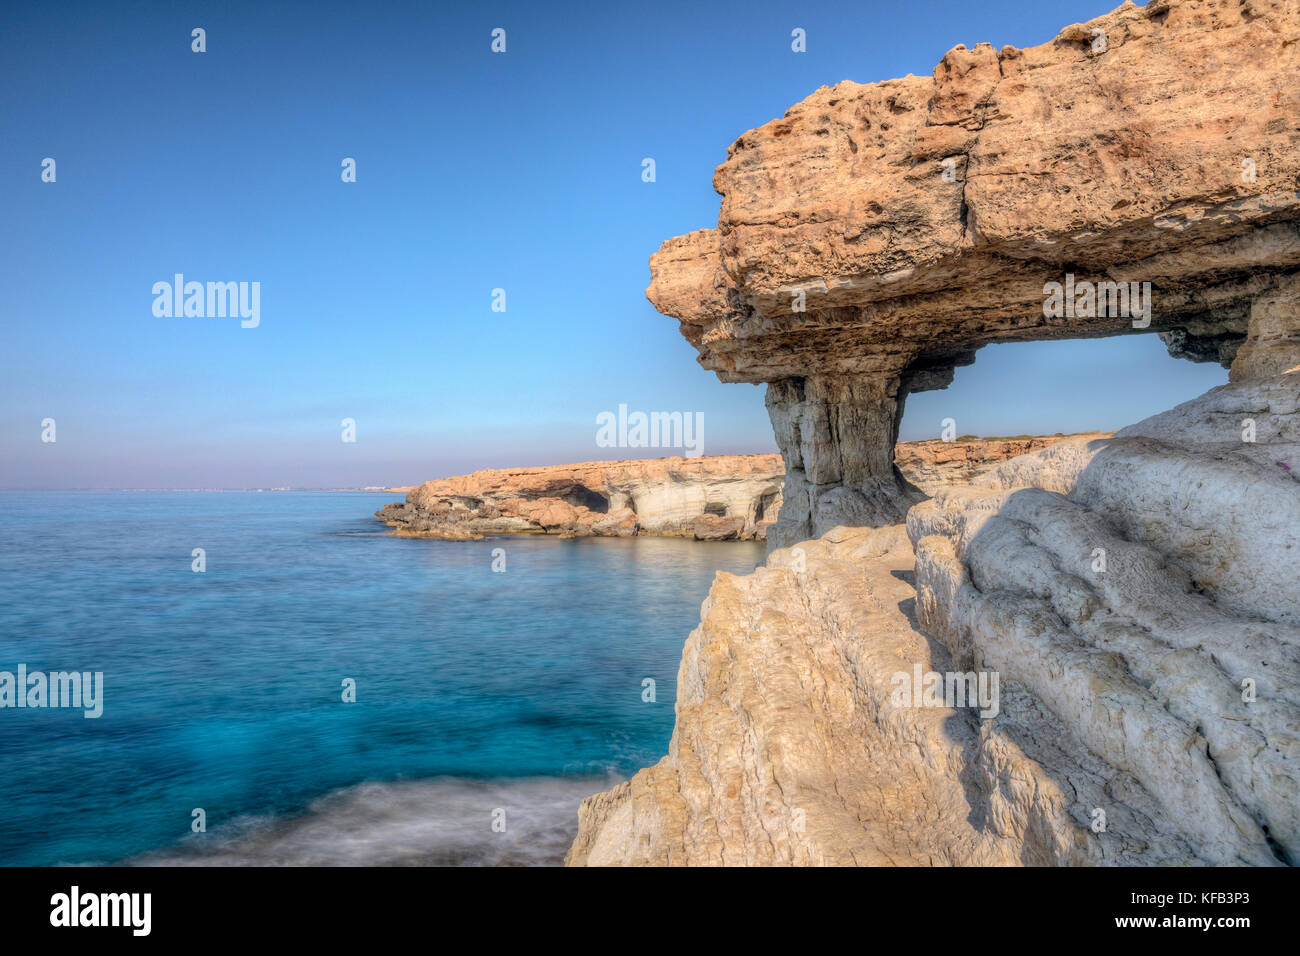 Grotte marine, Ayia Napa, Cipro Foto Stock